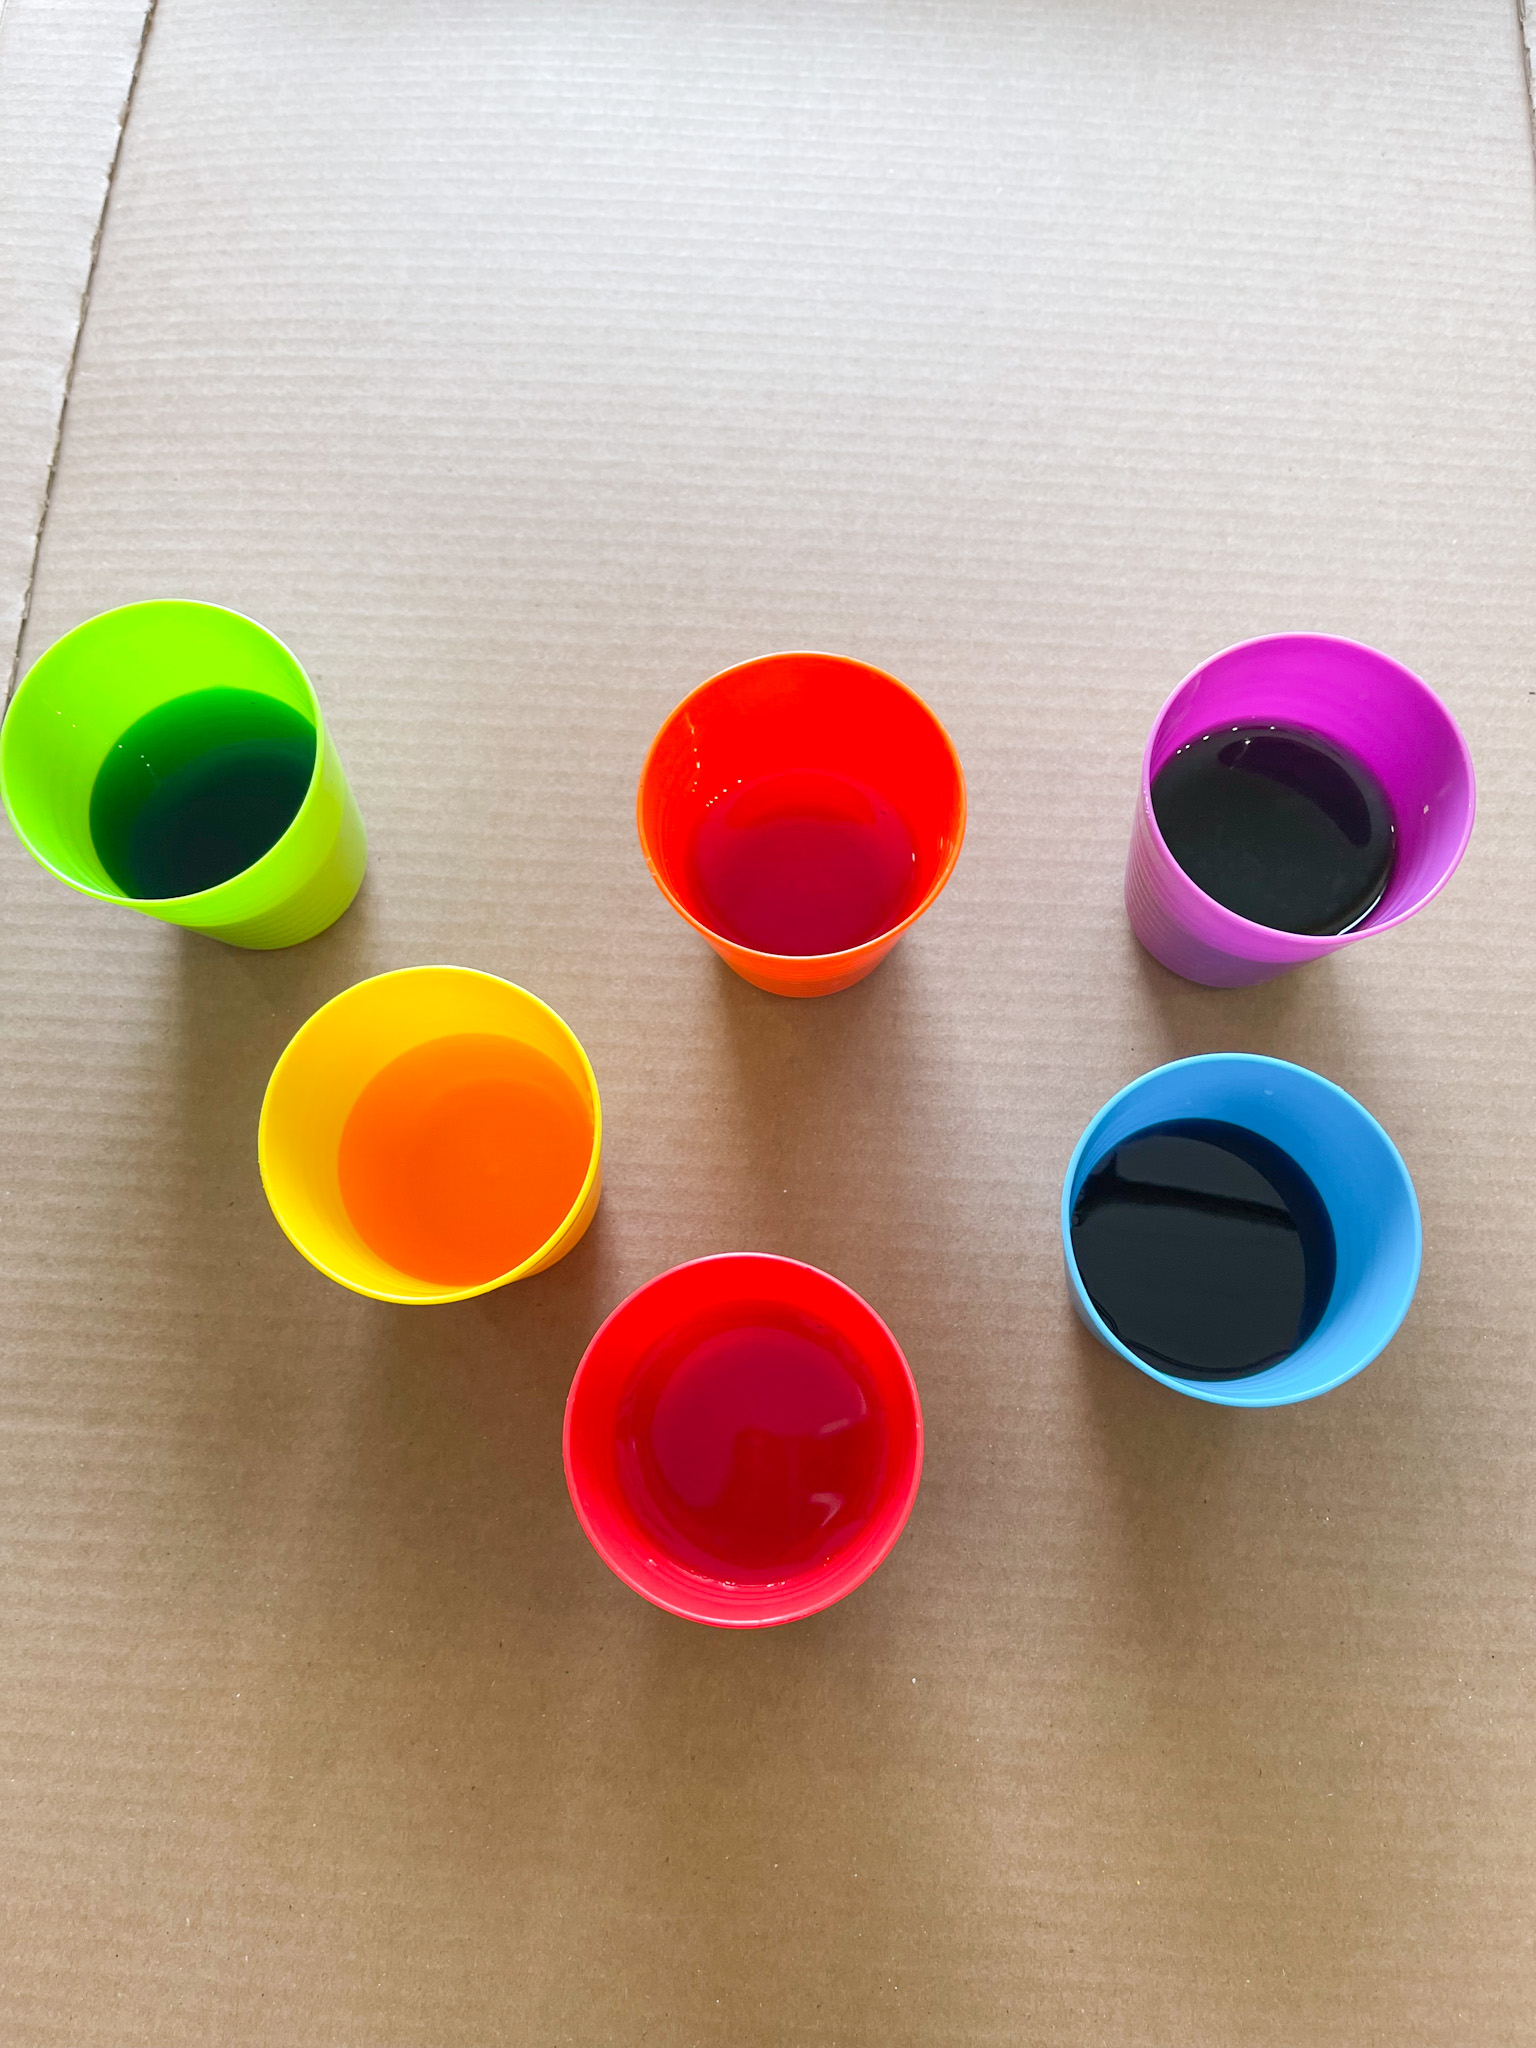 6 cups of food coloring dye on cardboard